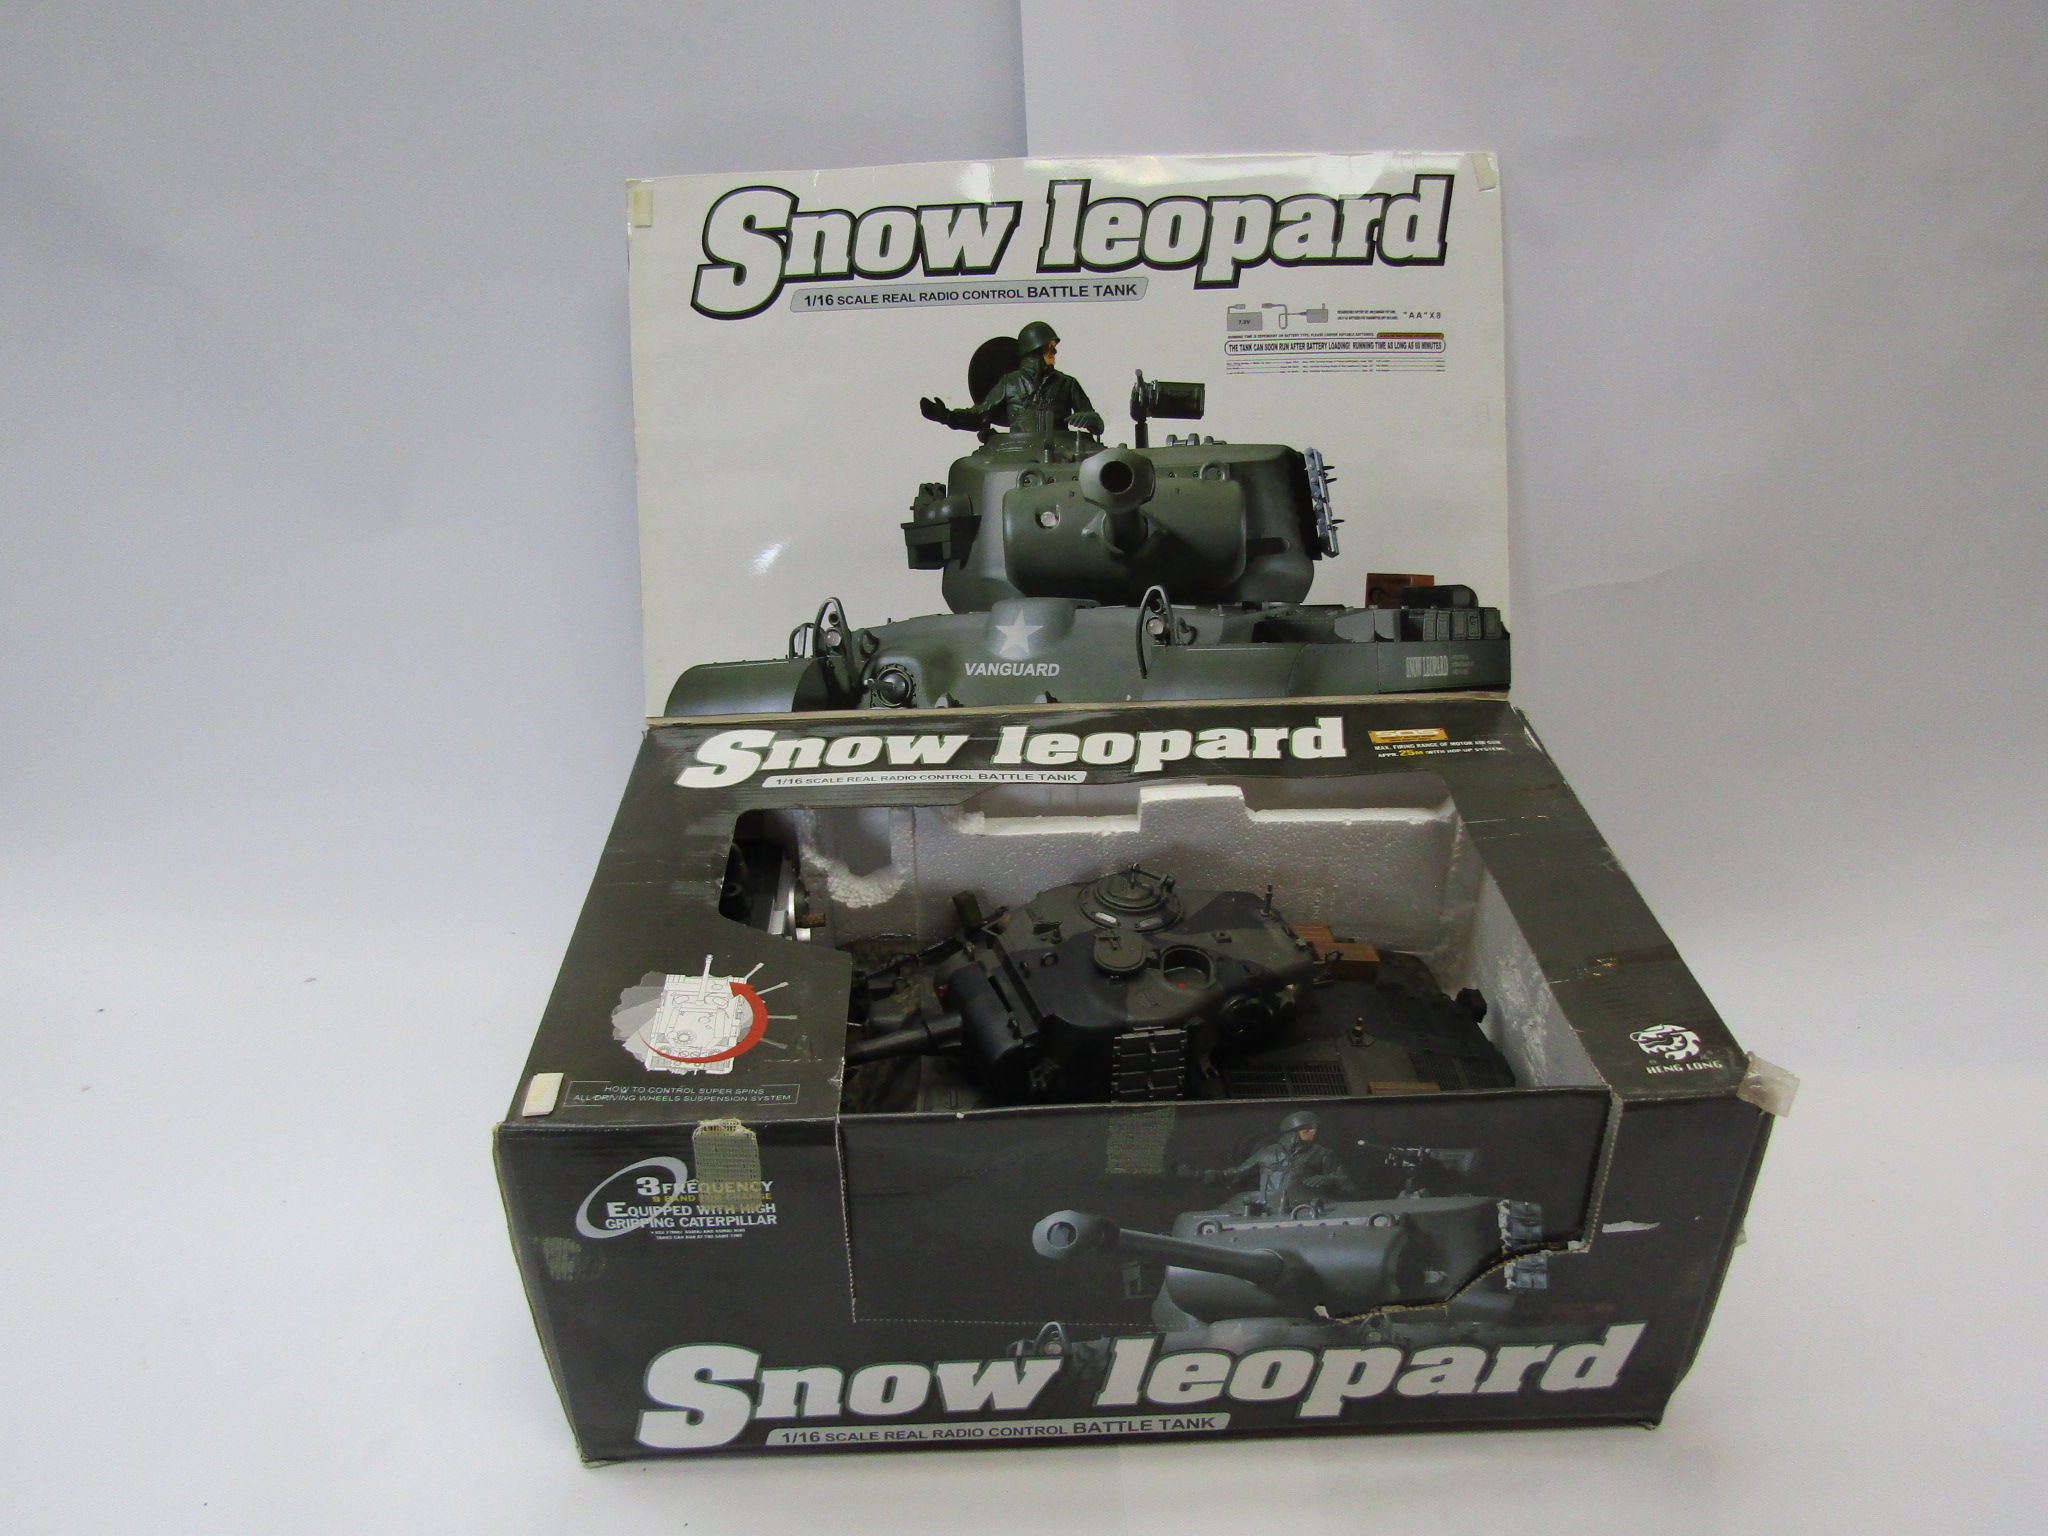 A Snow Leopard radio control battle tank